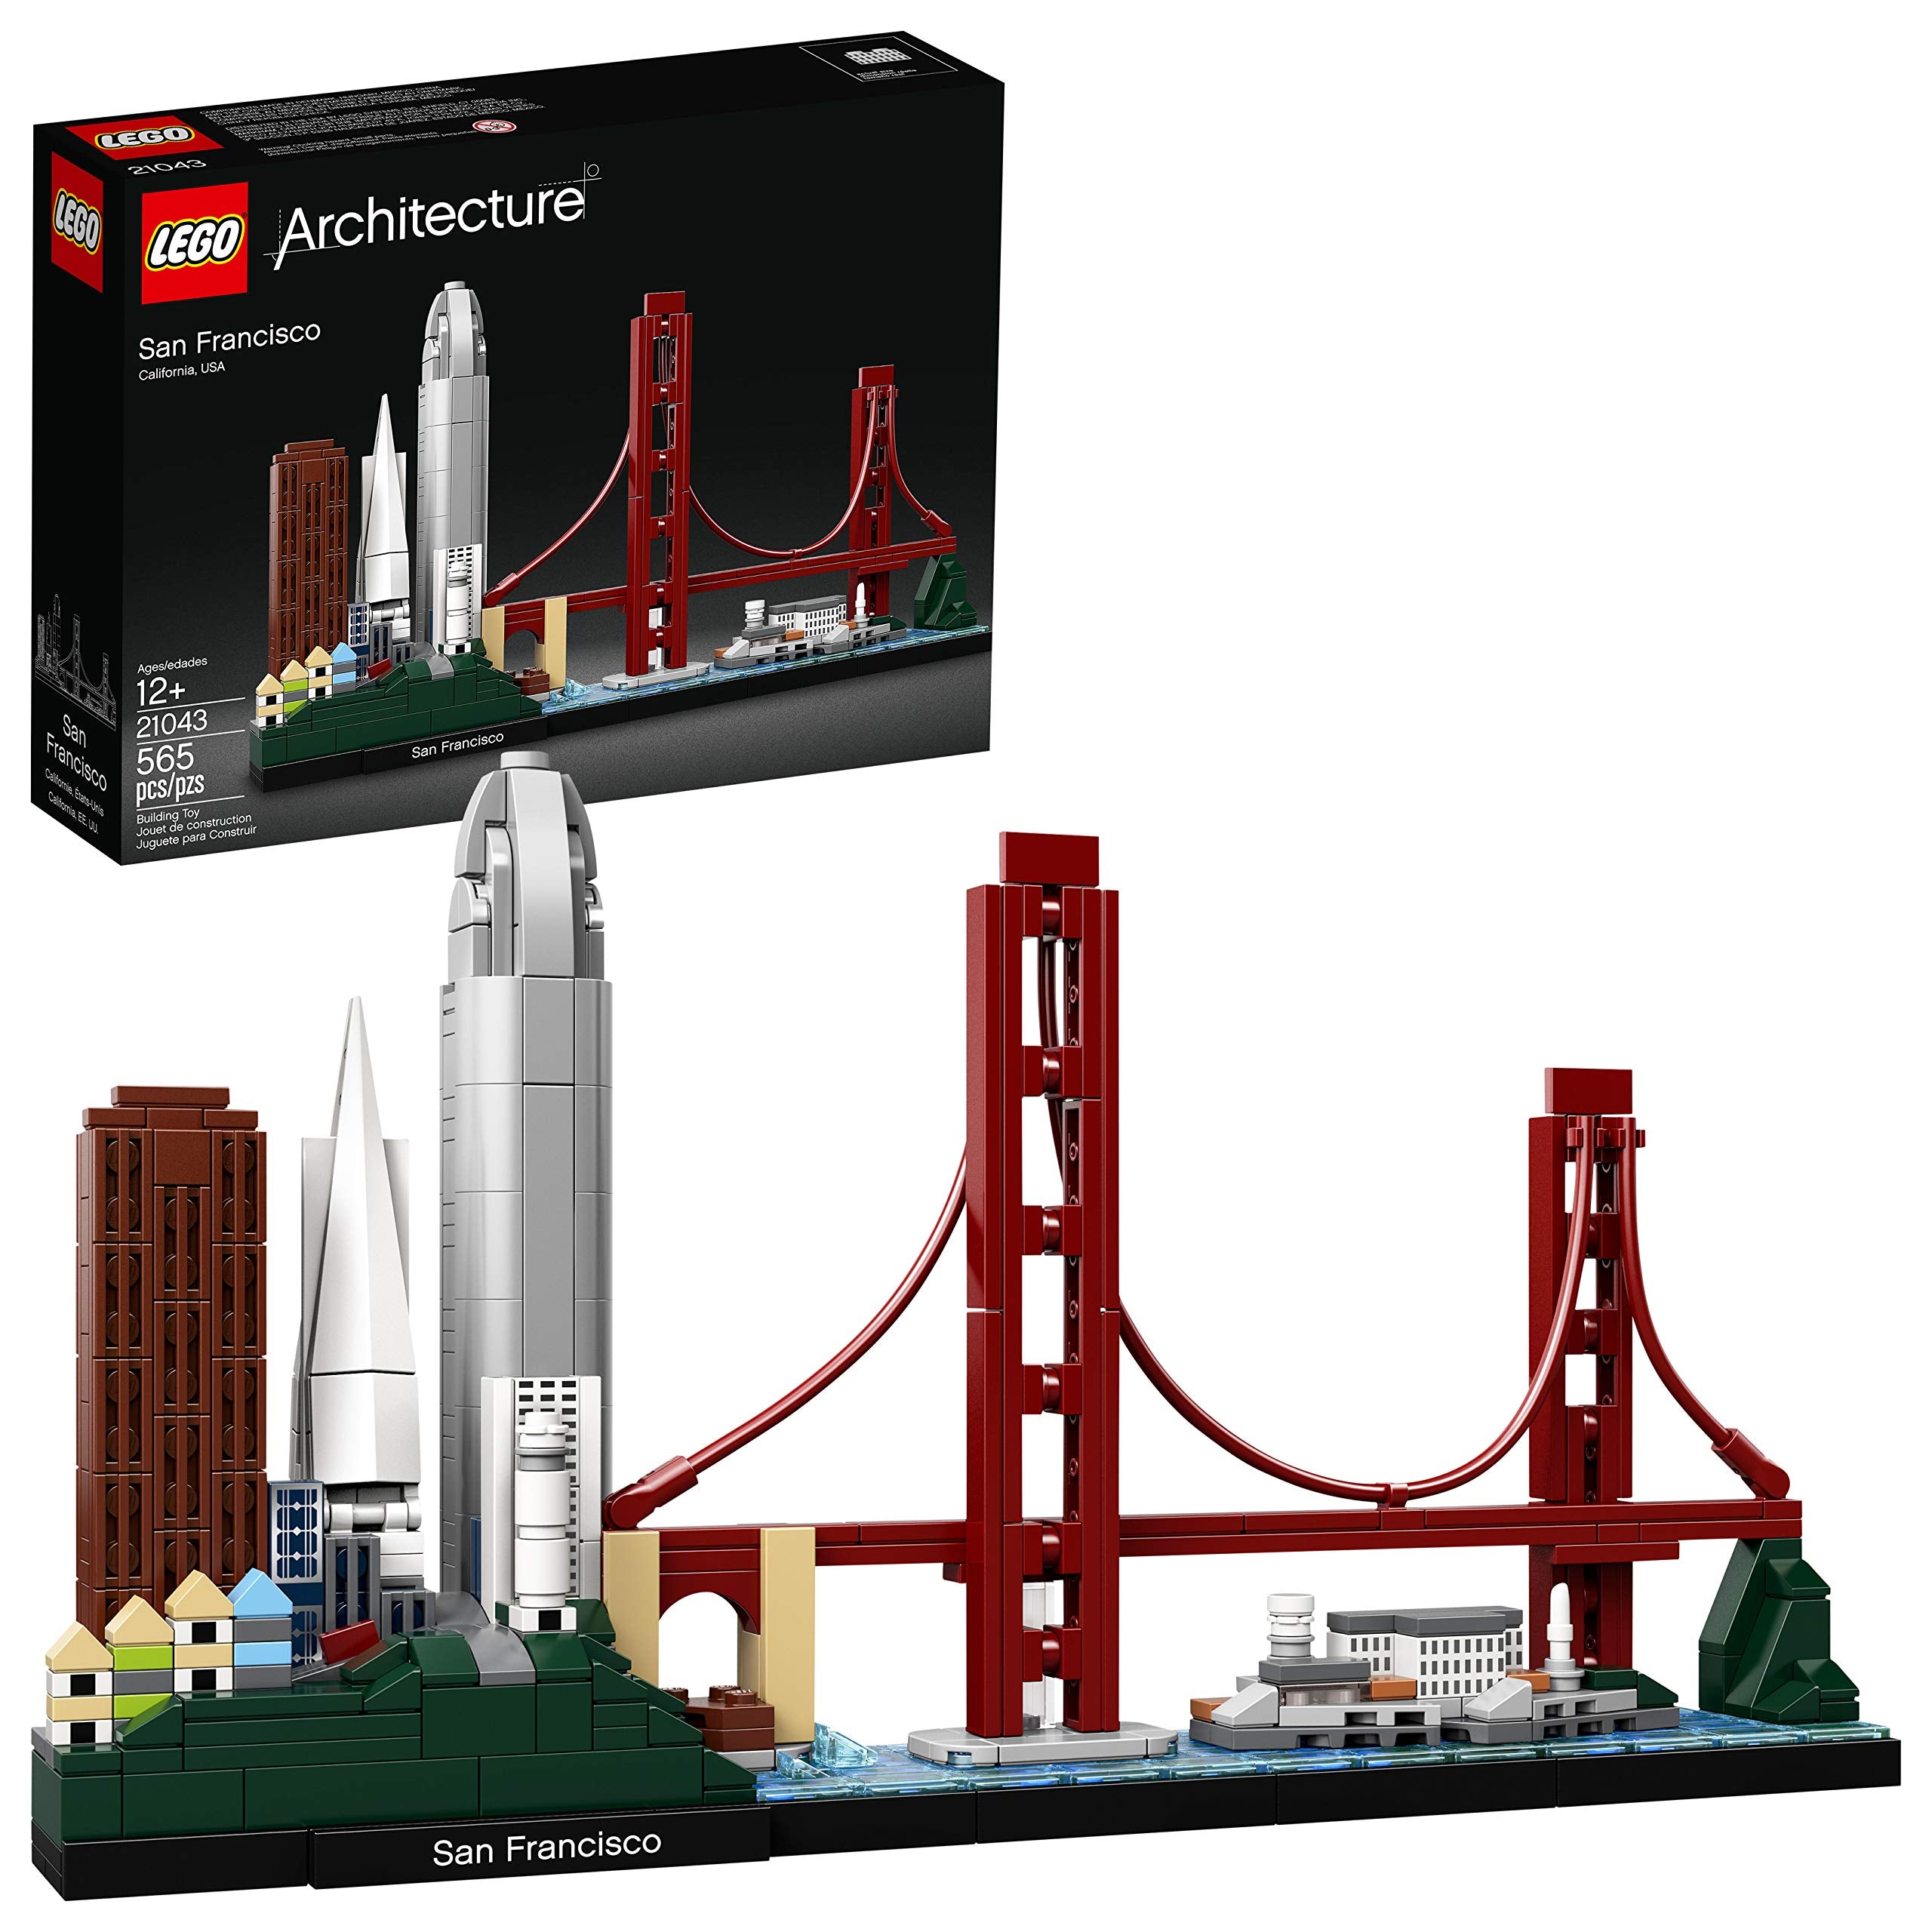 LEGO Architecture Skyline Collection 21043 San Francisco Building Kit (565 Piece)